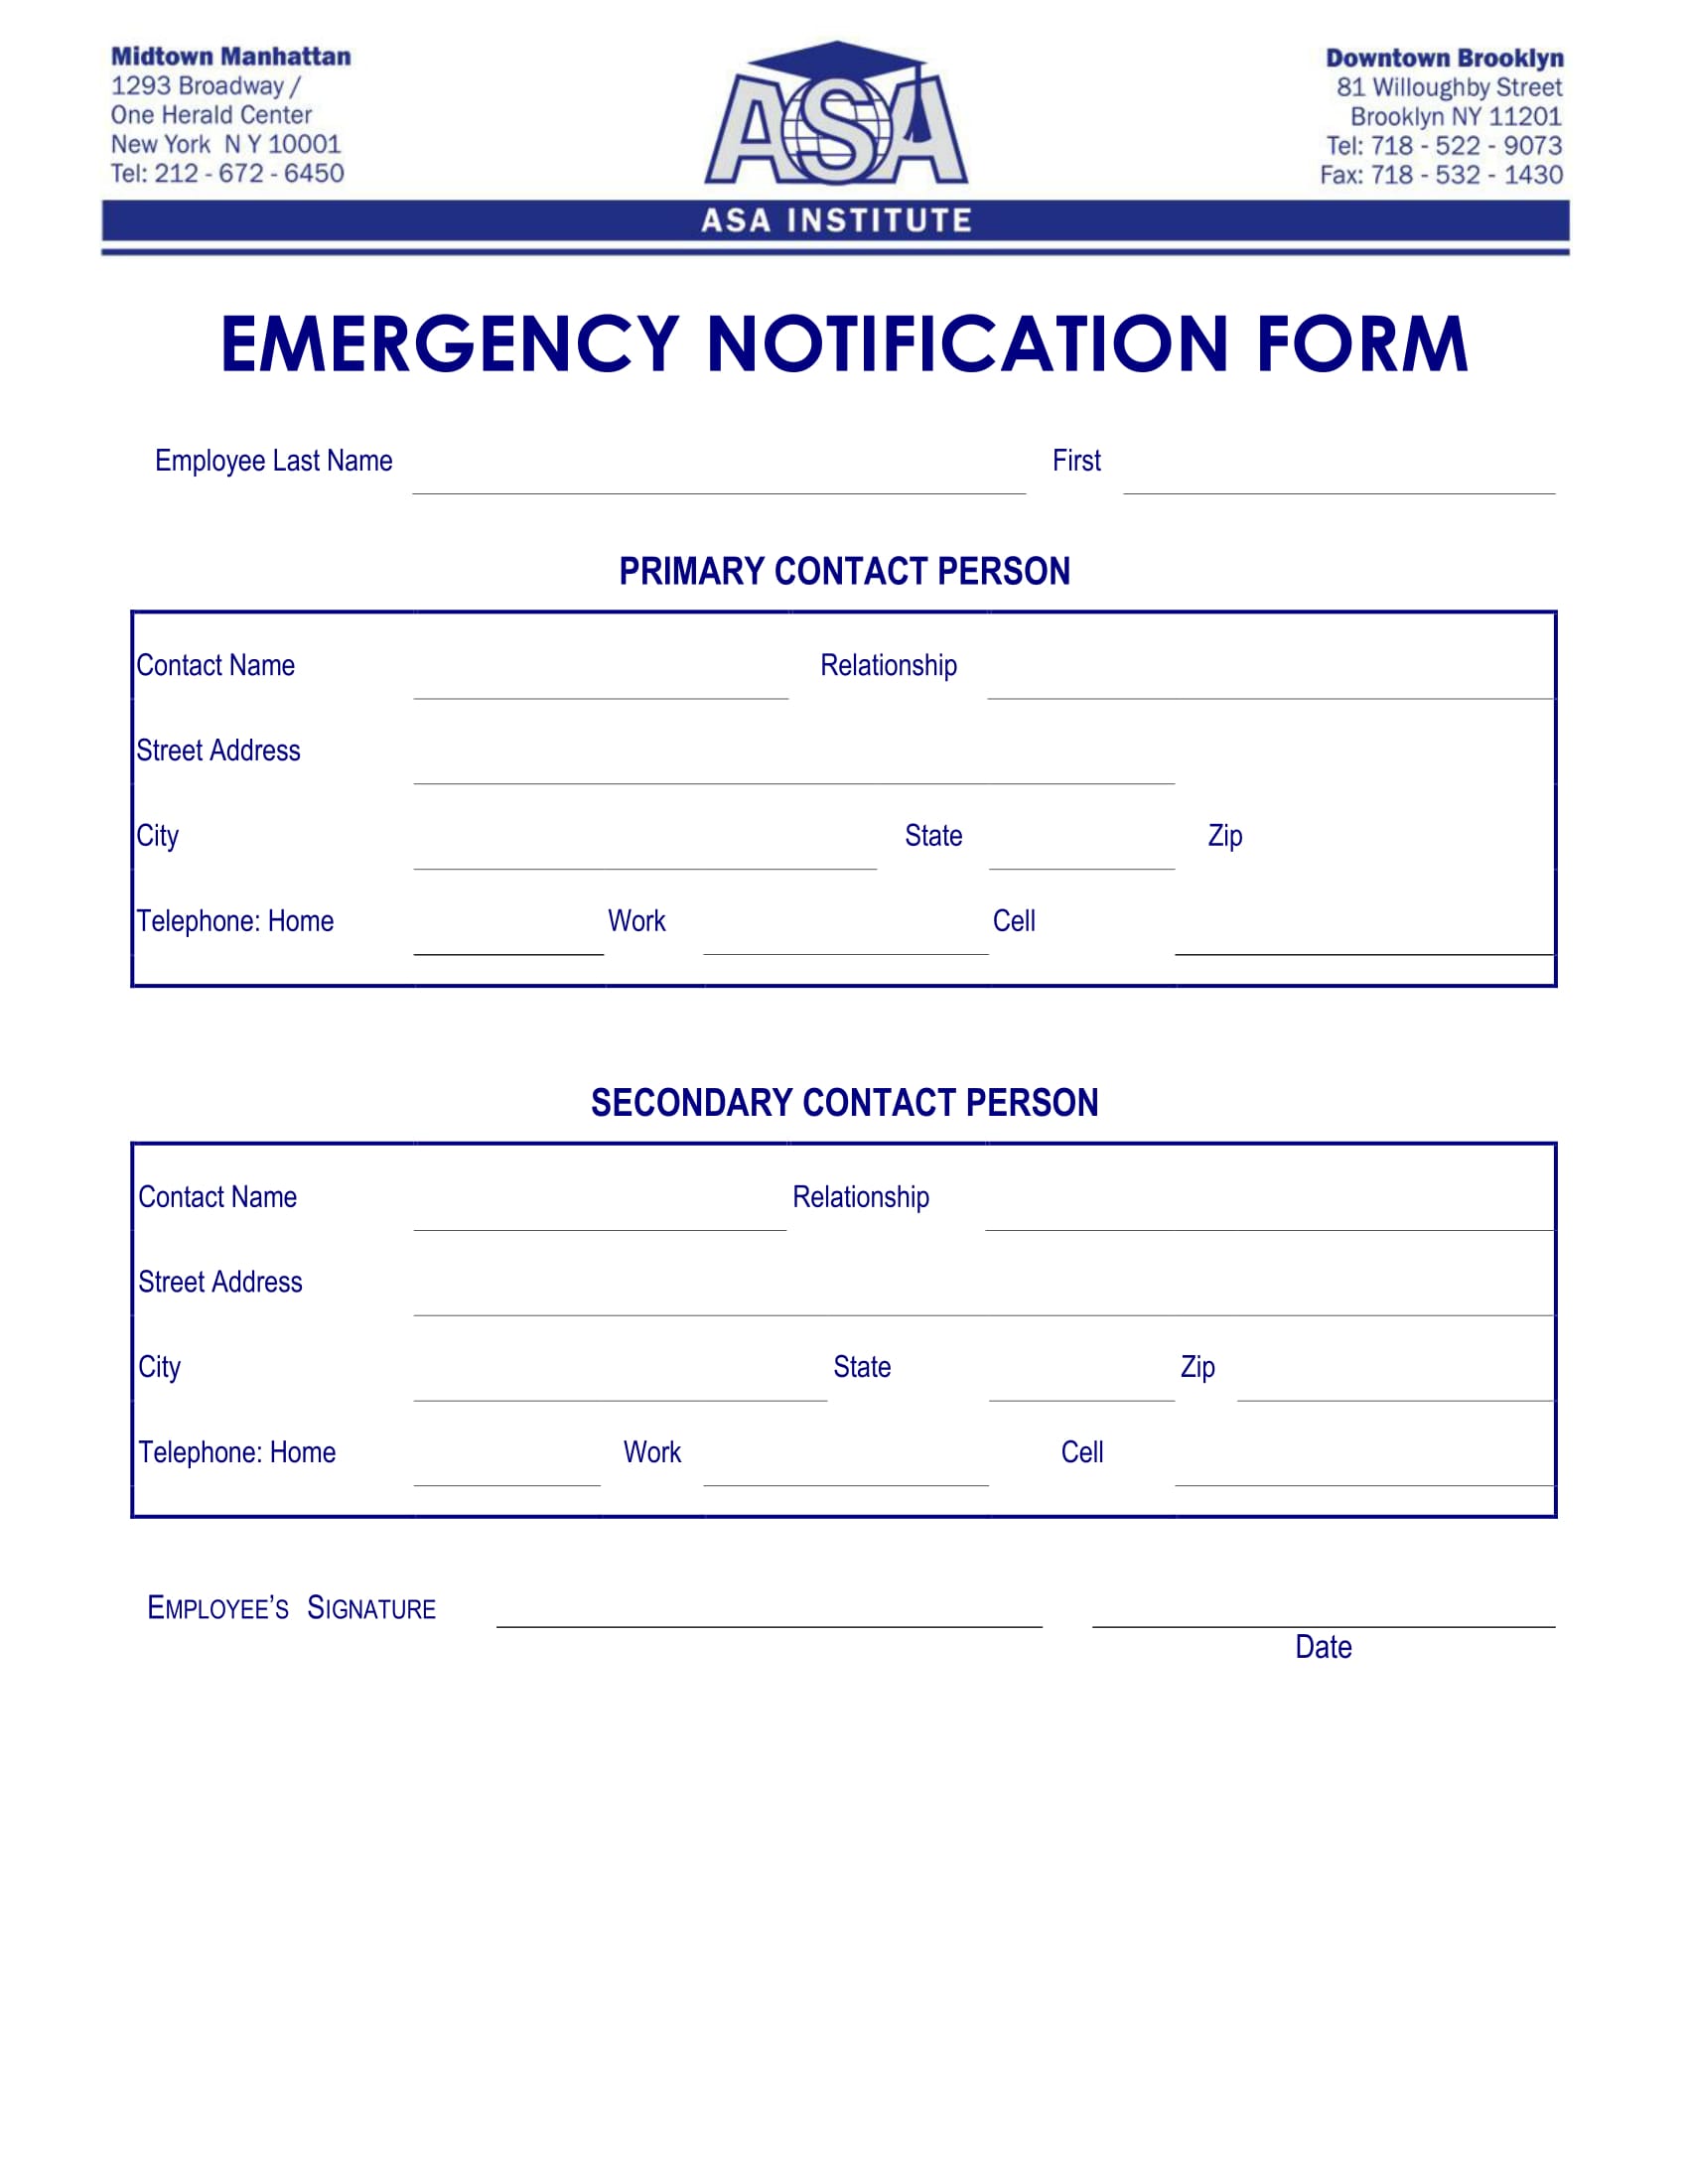 institute employee emergency notification form 1